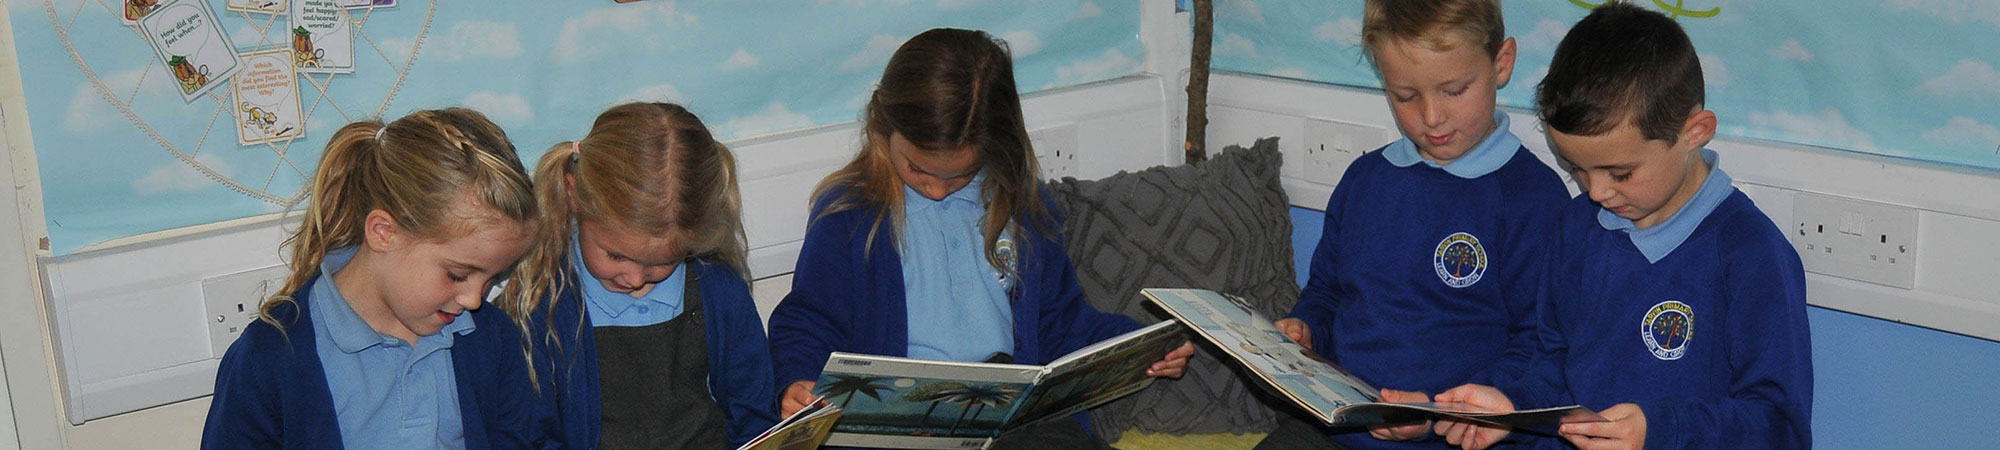 Primary school children reading